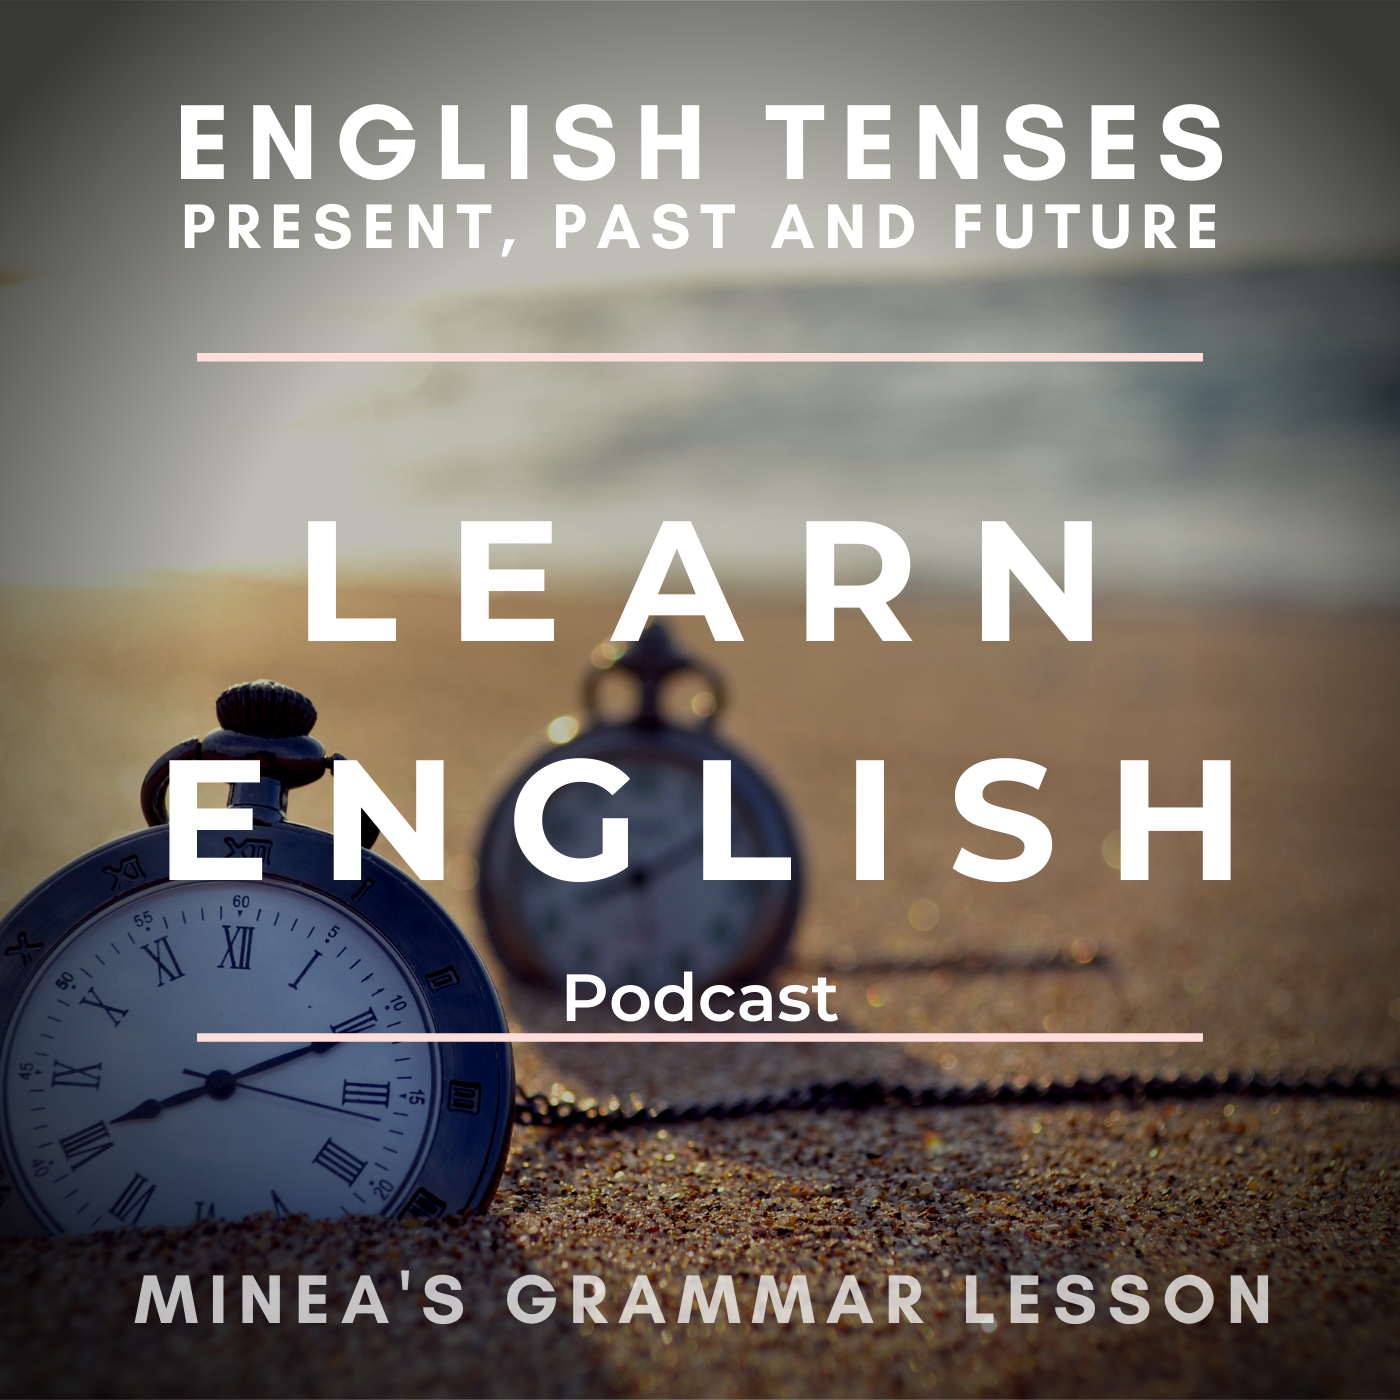 Learn English Podcast: English Tenses - Present, Past and Future (Minea Season 1, Episode 2)